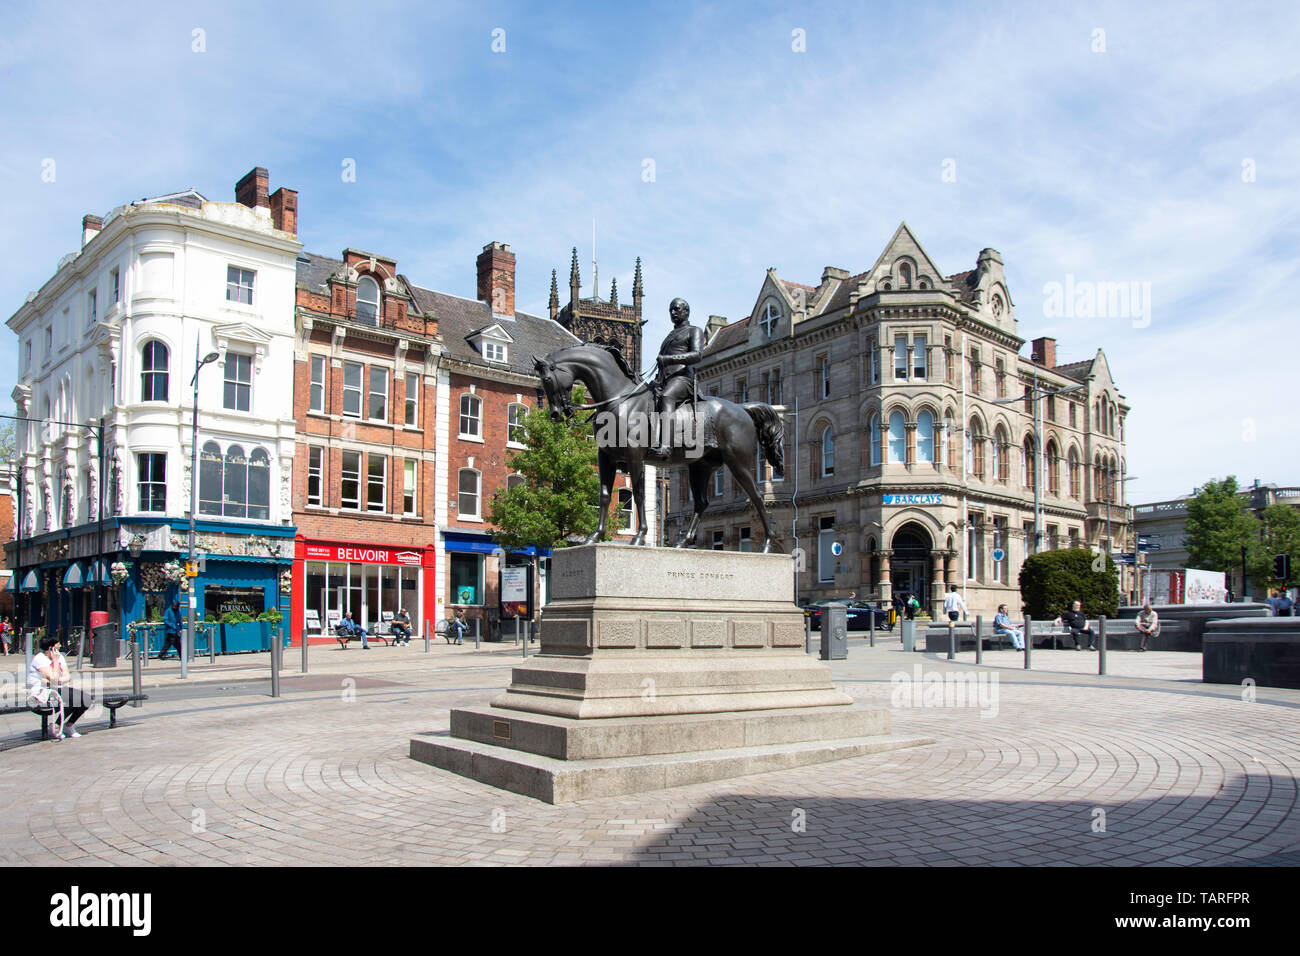 Statue of Prince Albert, Queen Square, Wolverhampton, West Midlands, England, United Kingdom Stock Photo